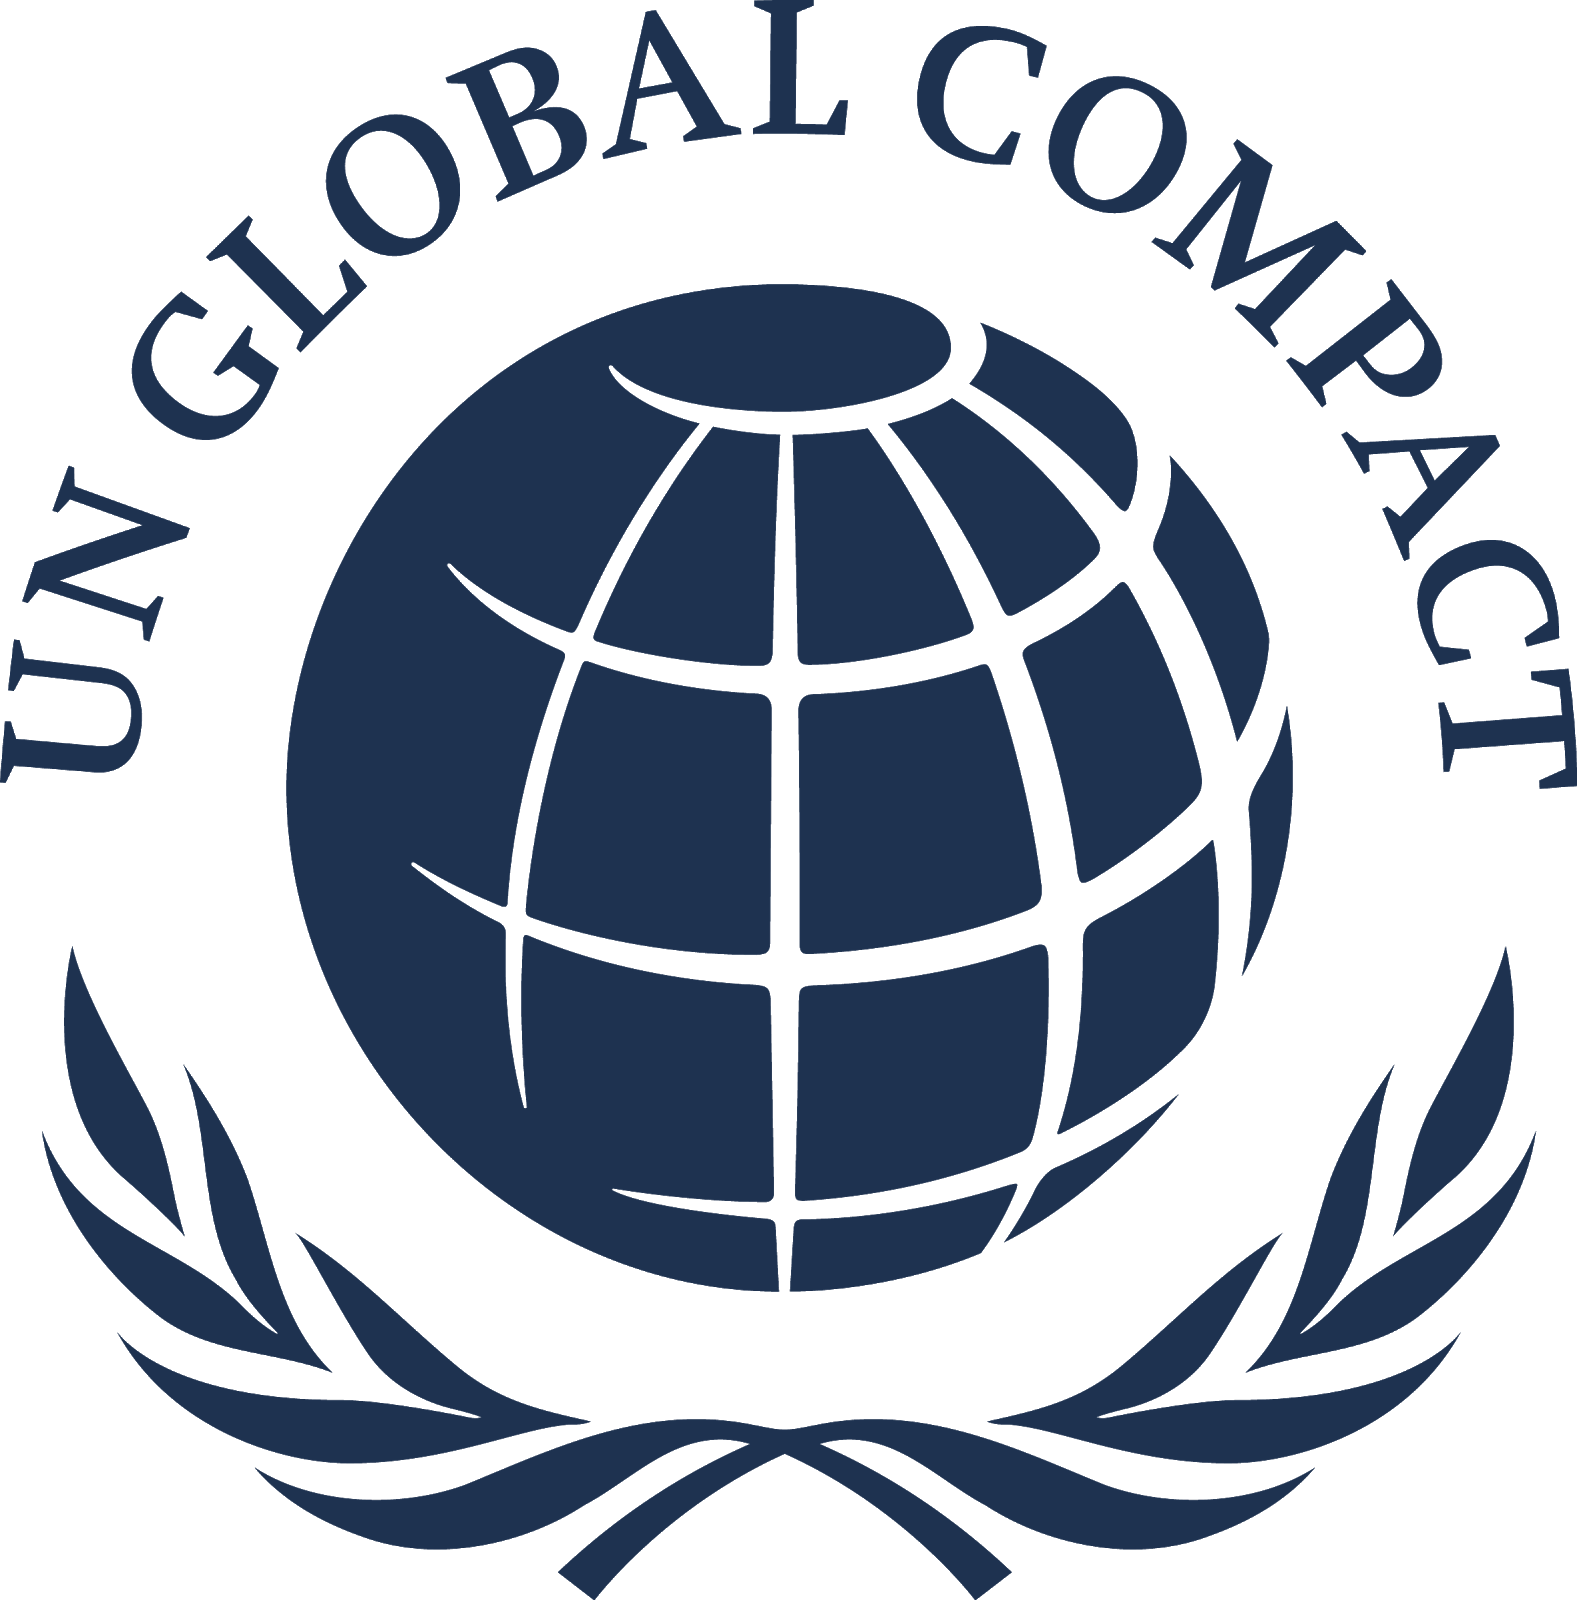 New UN Global Compac